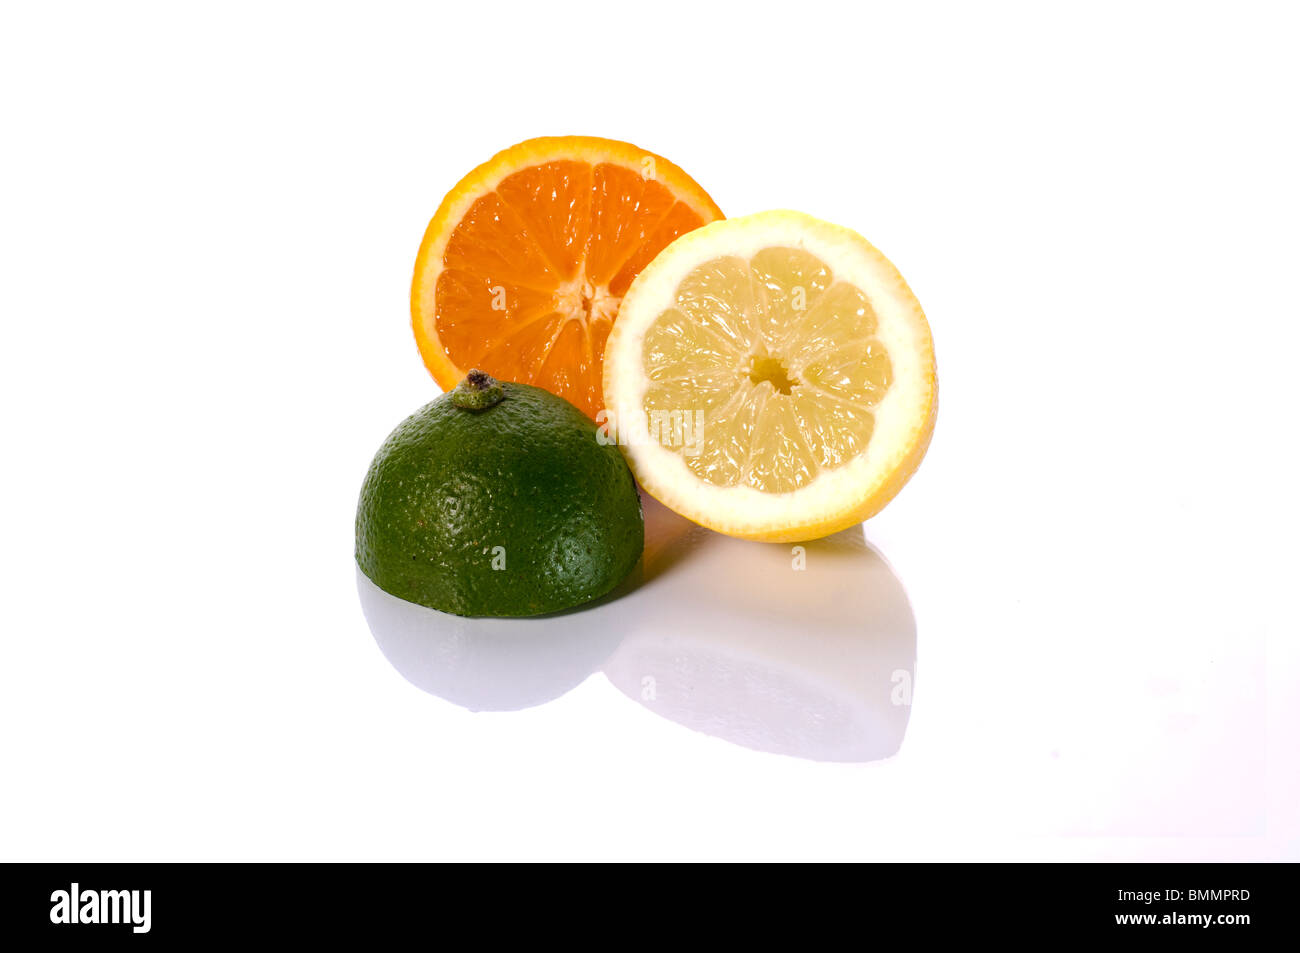 orange, lemon and lime Stock Photo